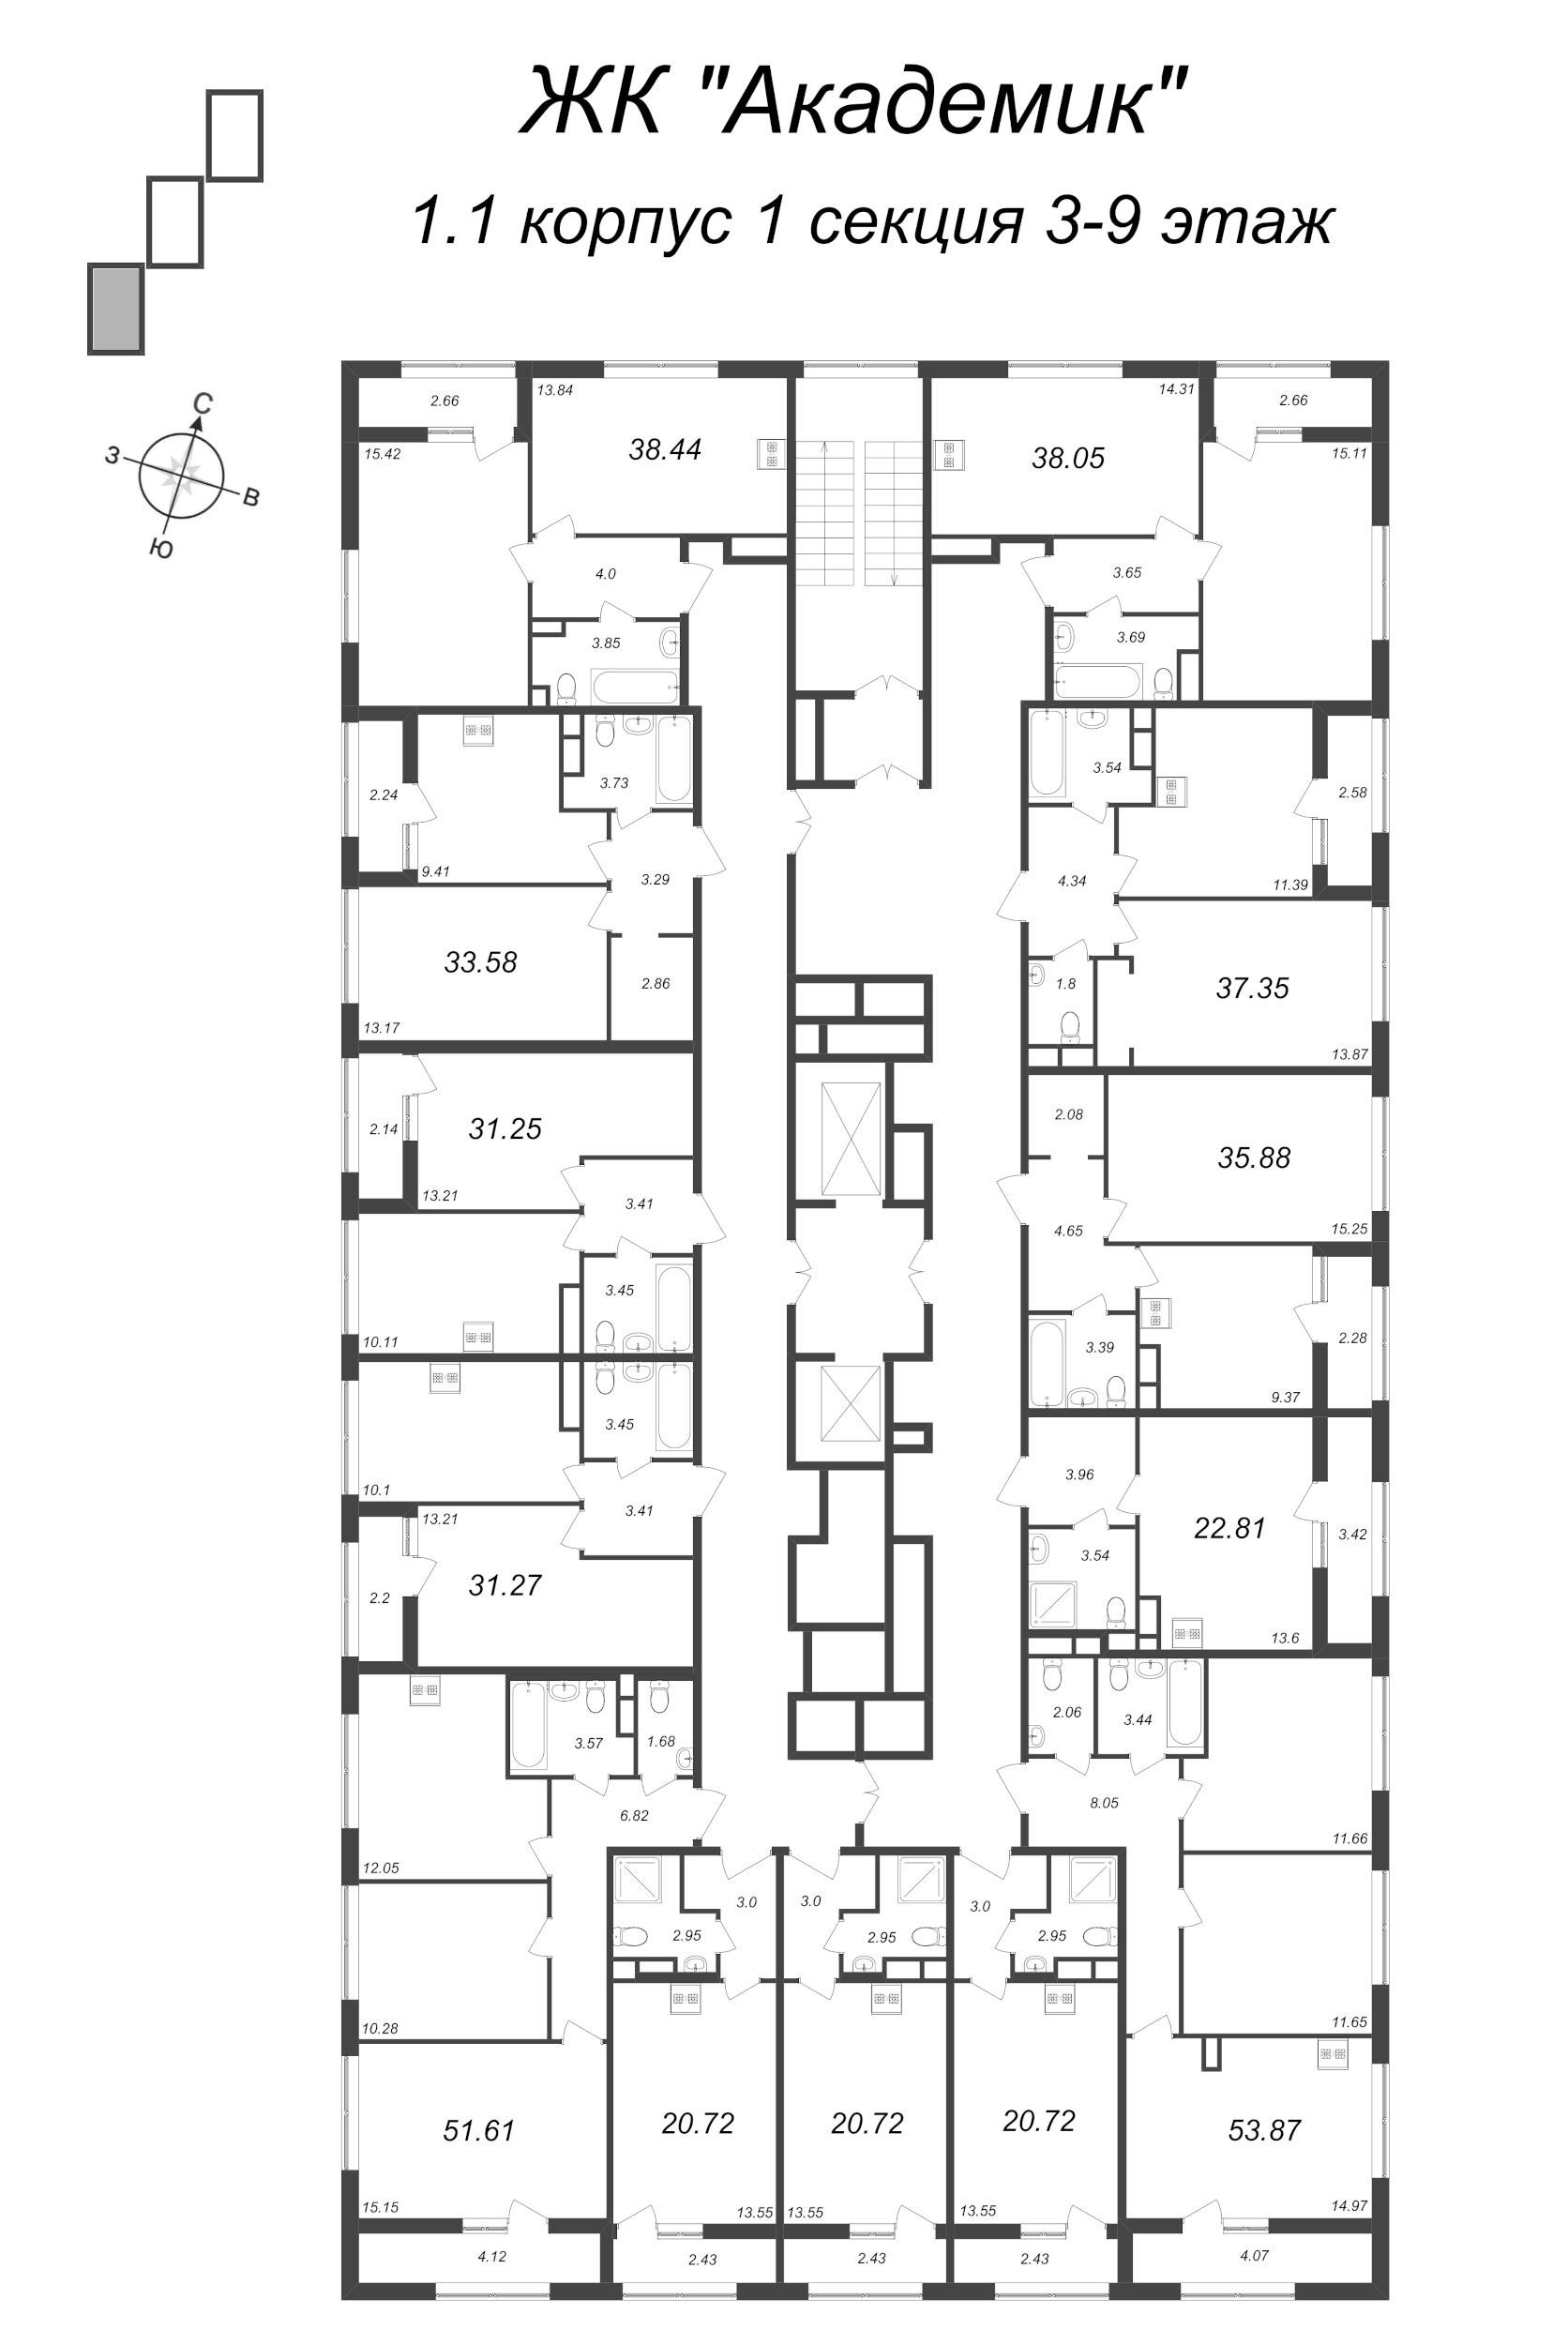 3-комнатная (Евро) квартира, 53.87 м² - планировка этажа